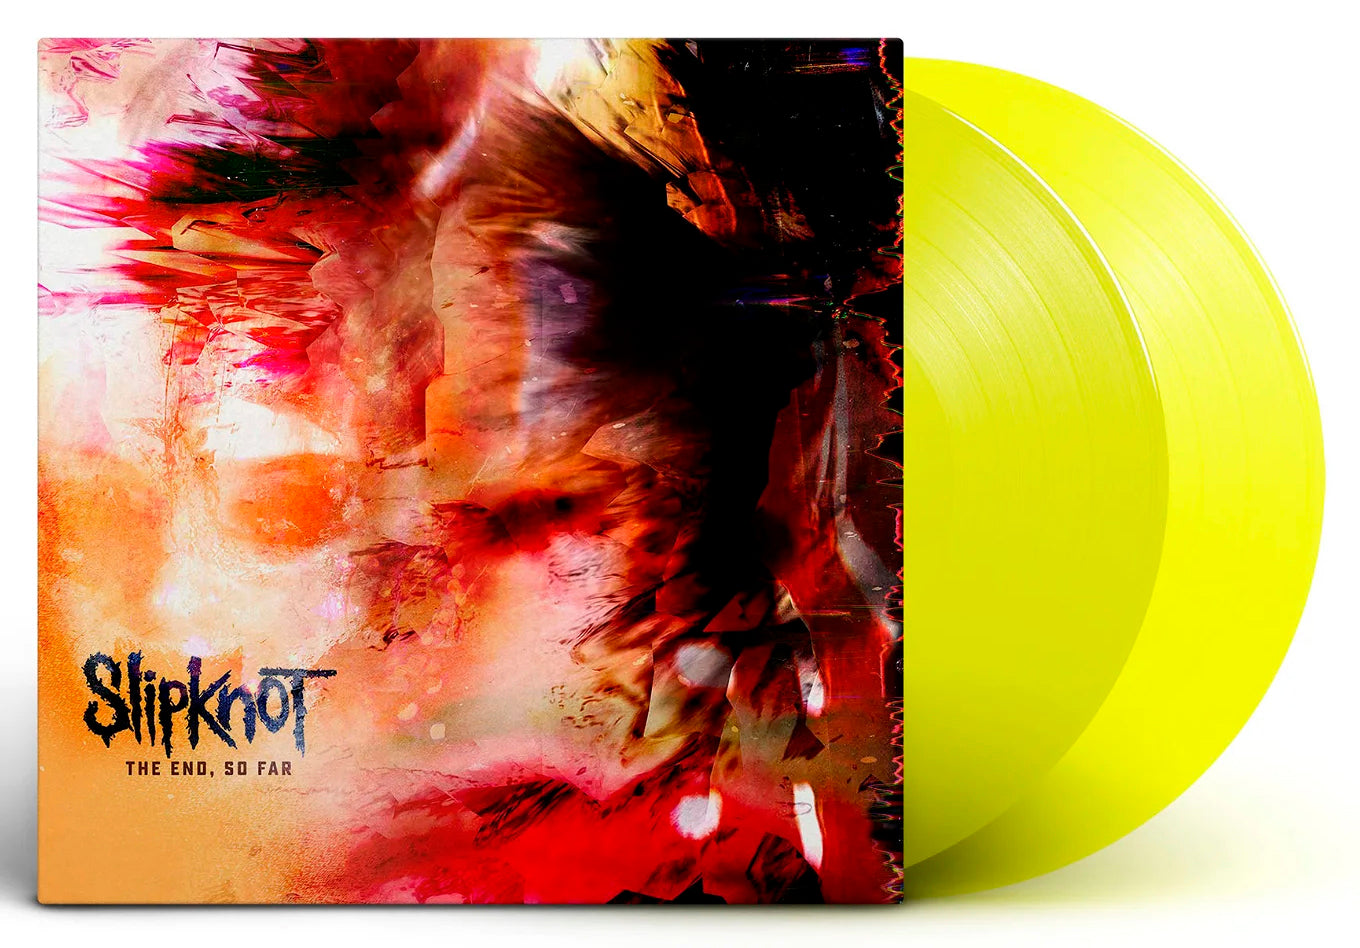 Slipknot The End So Far Limited Neon Yellow Vinyl LP